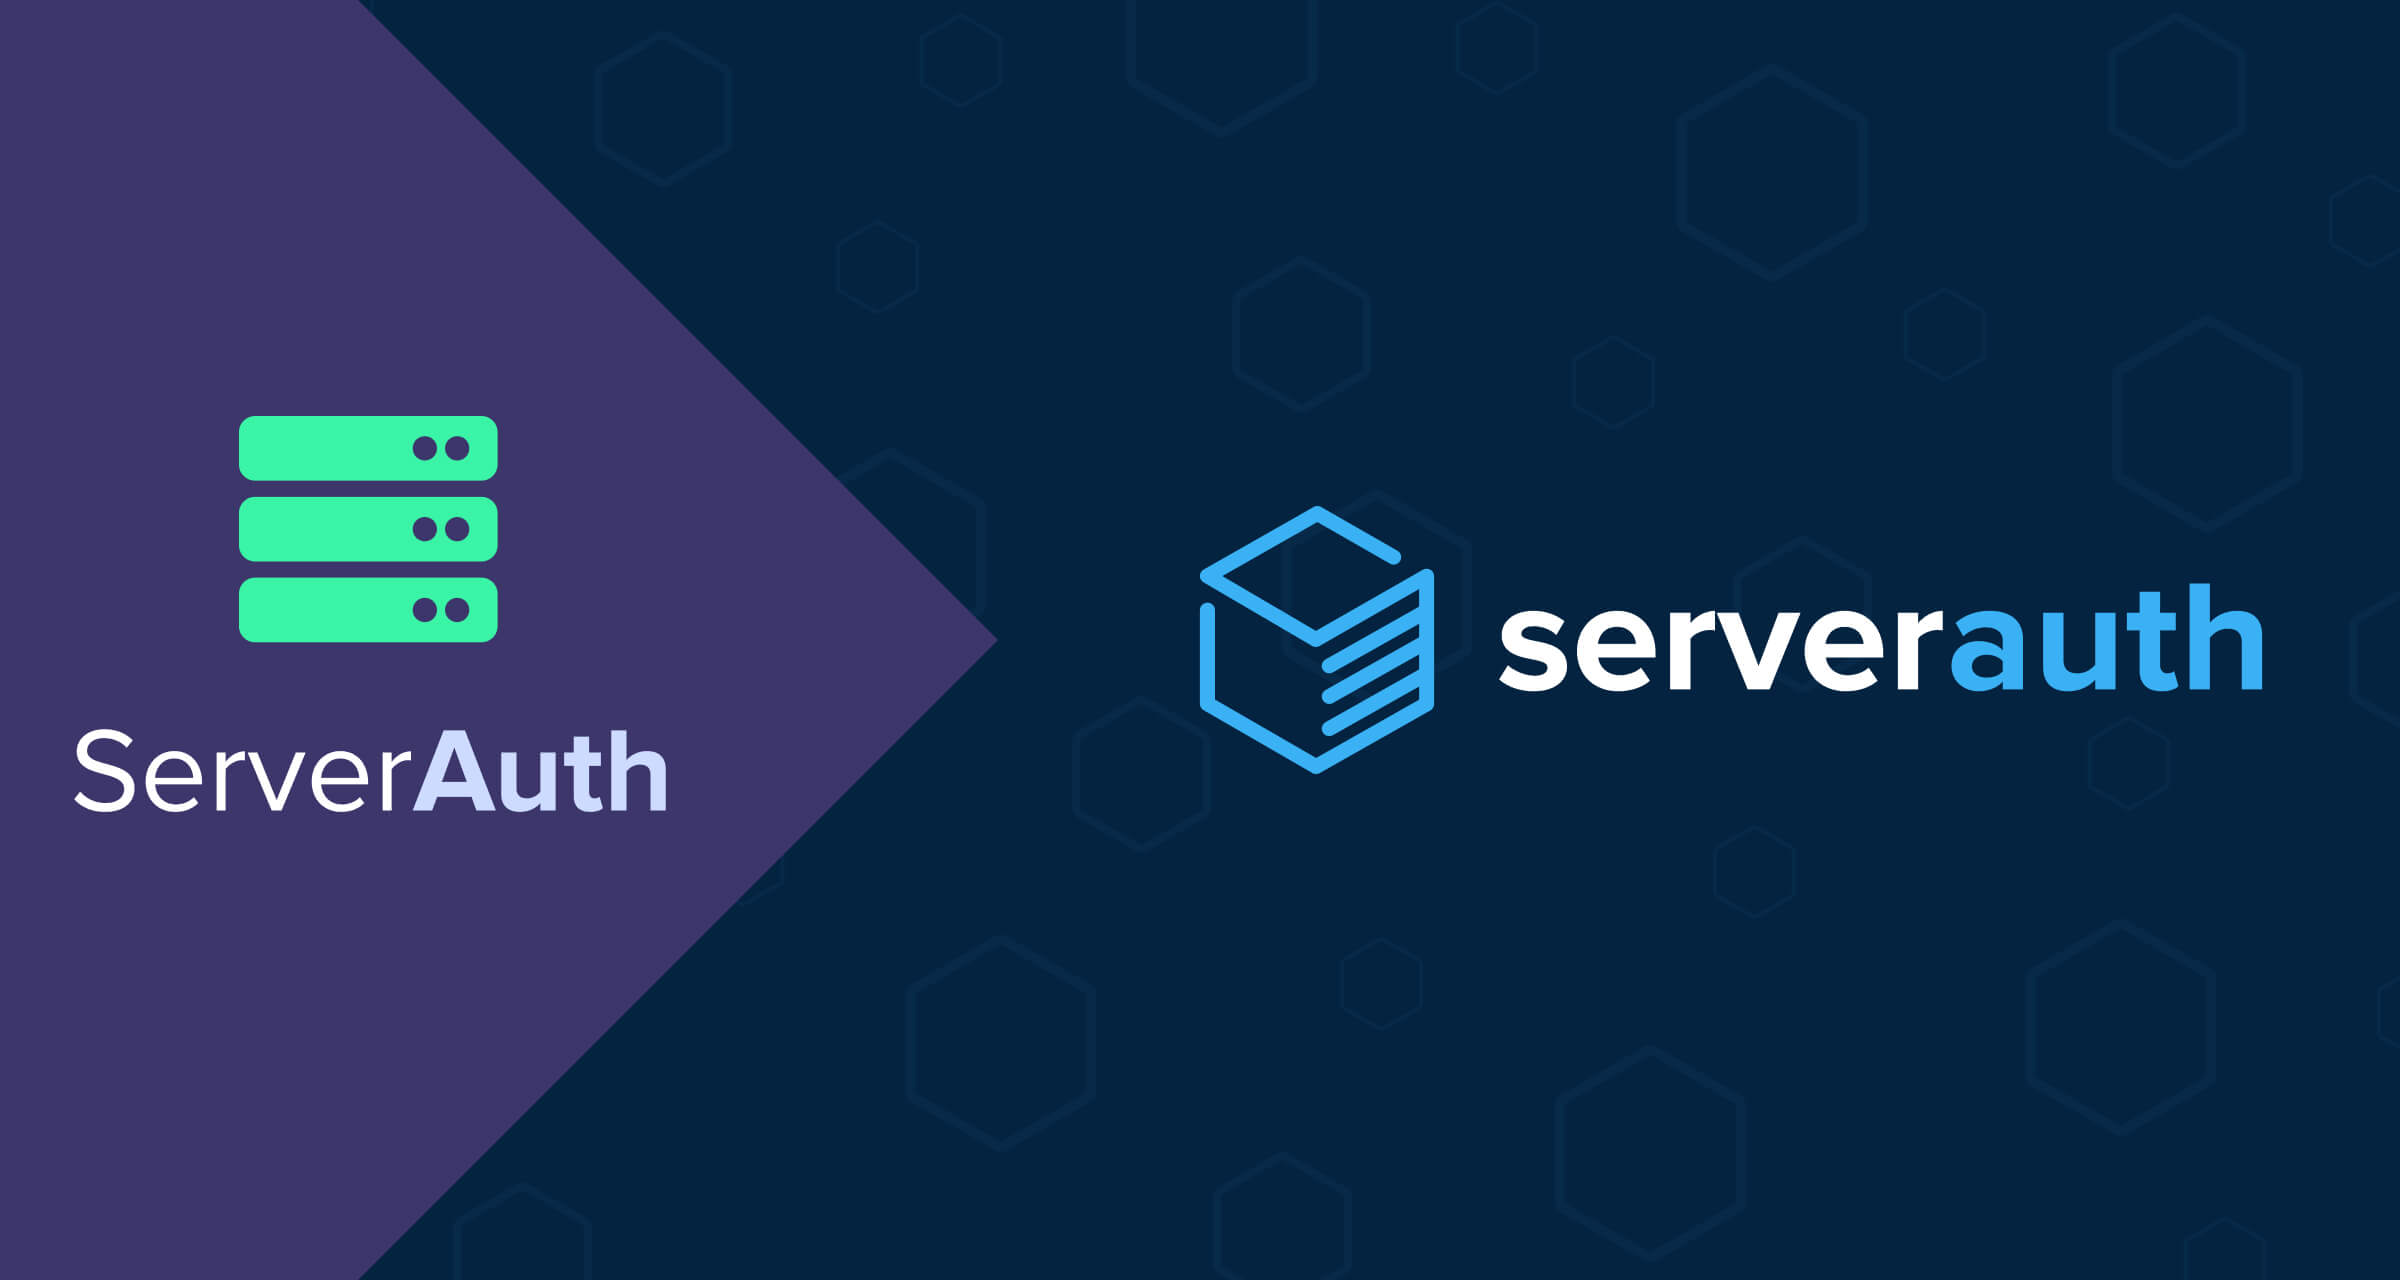 ServerAuth introduces Server management